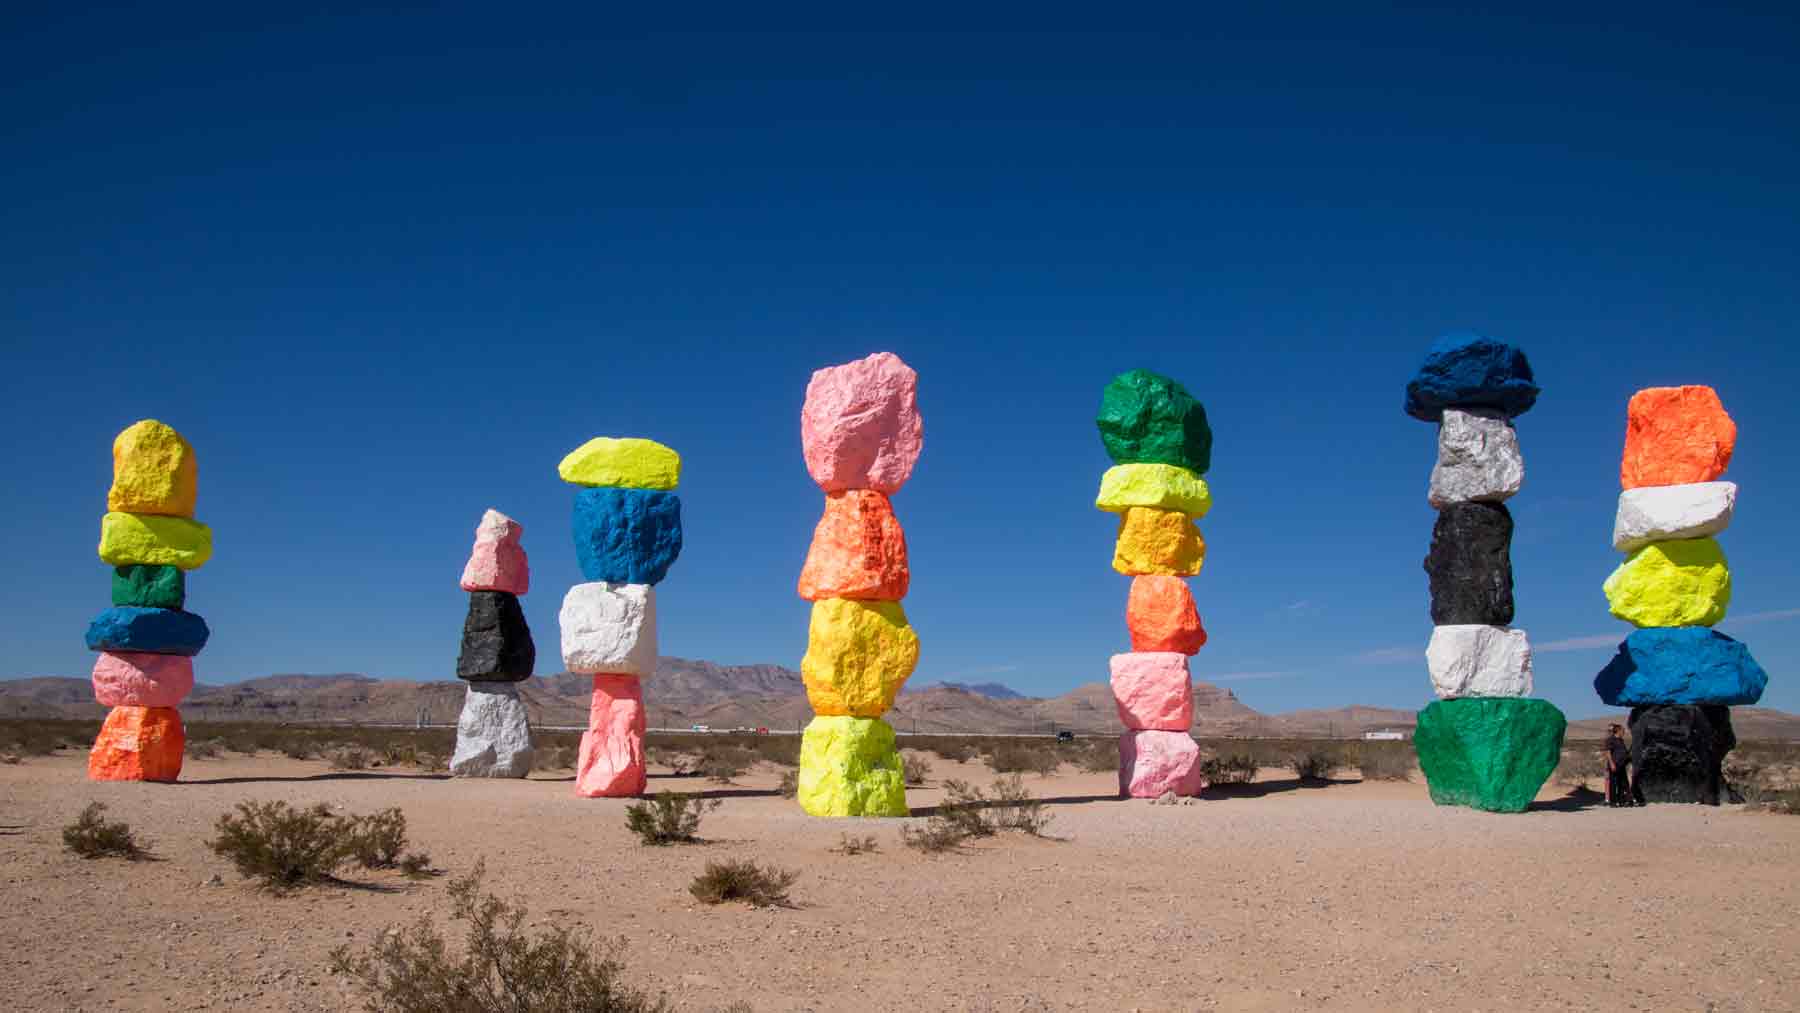 Seven Magic Mountains sculpture in the desert near Las Vegas